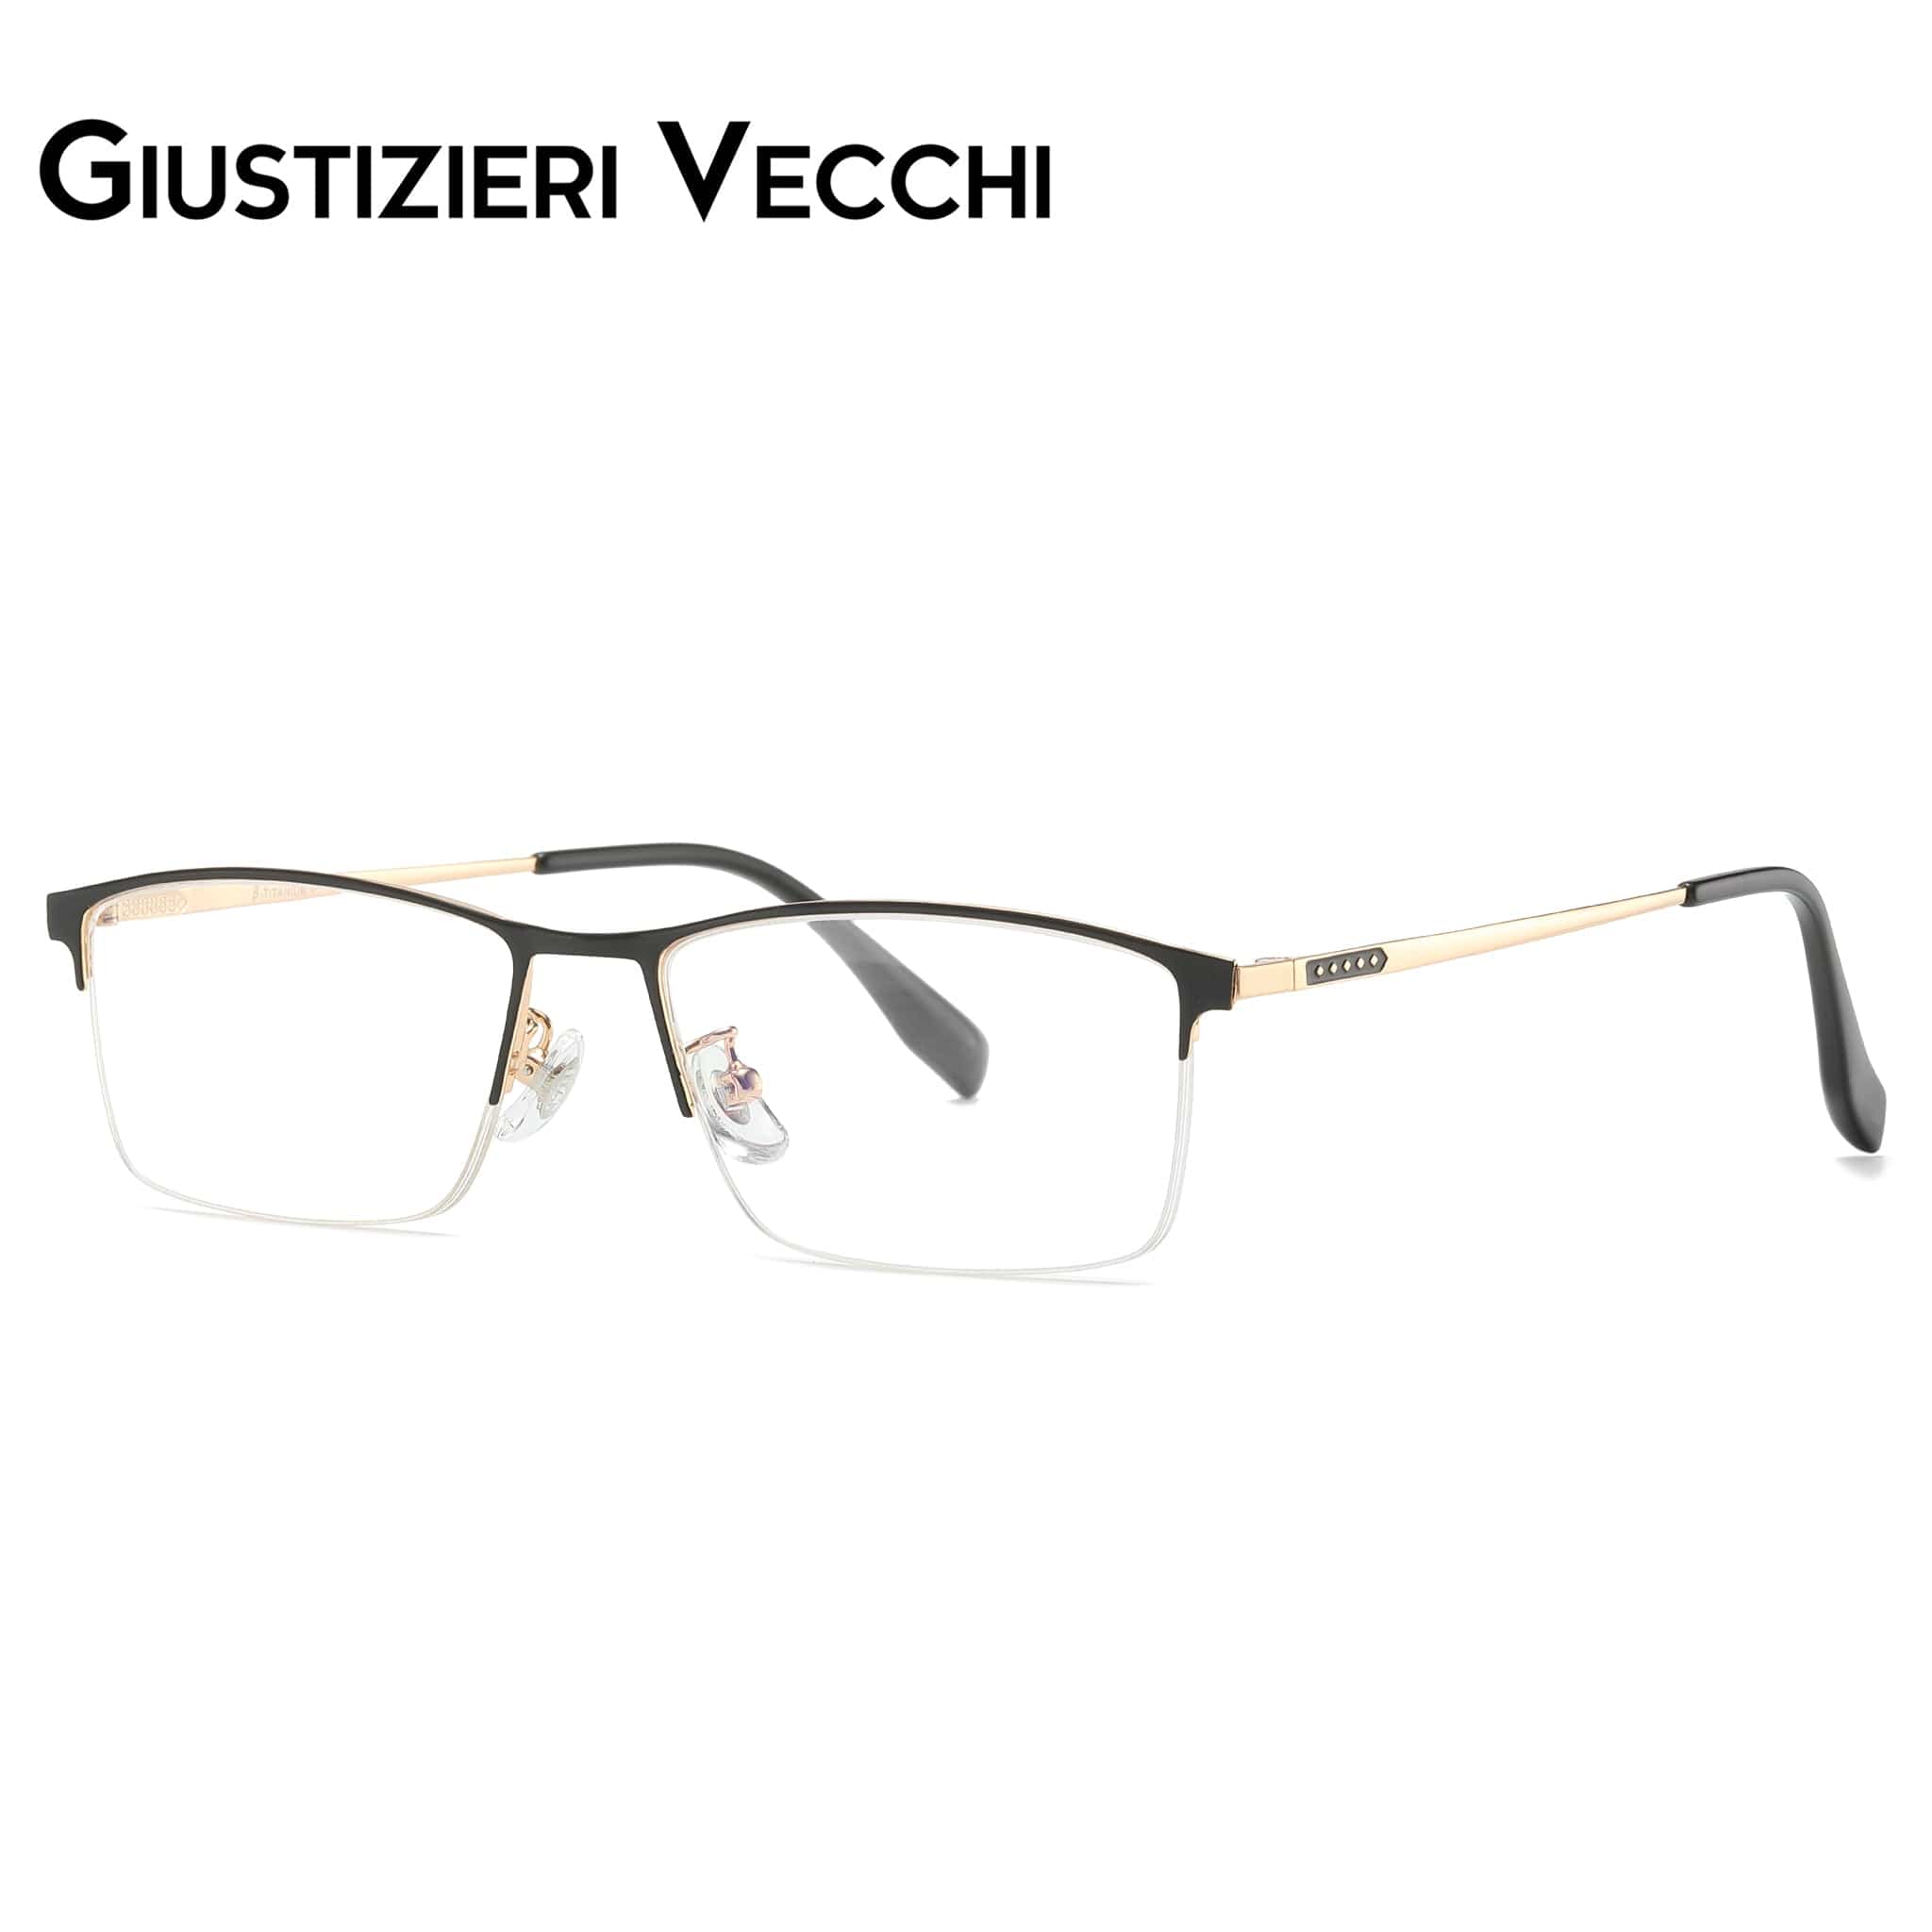 GIUSTIZIERI VECCHI Eyeglasses Thunderbolt Duo